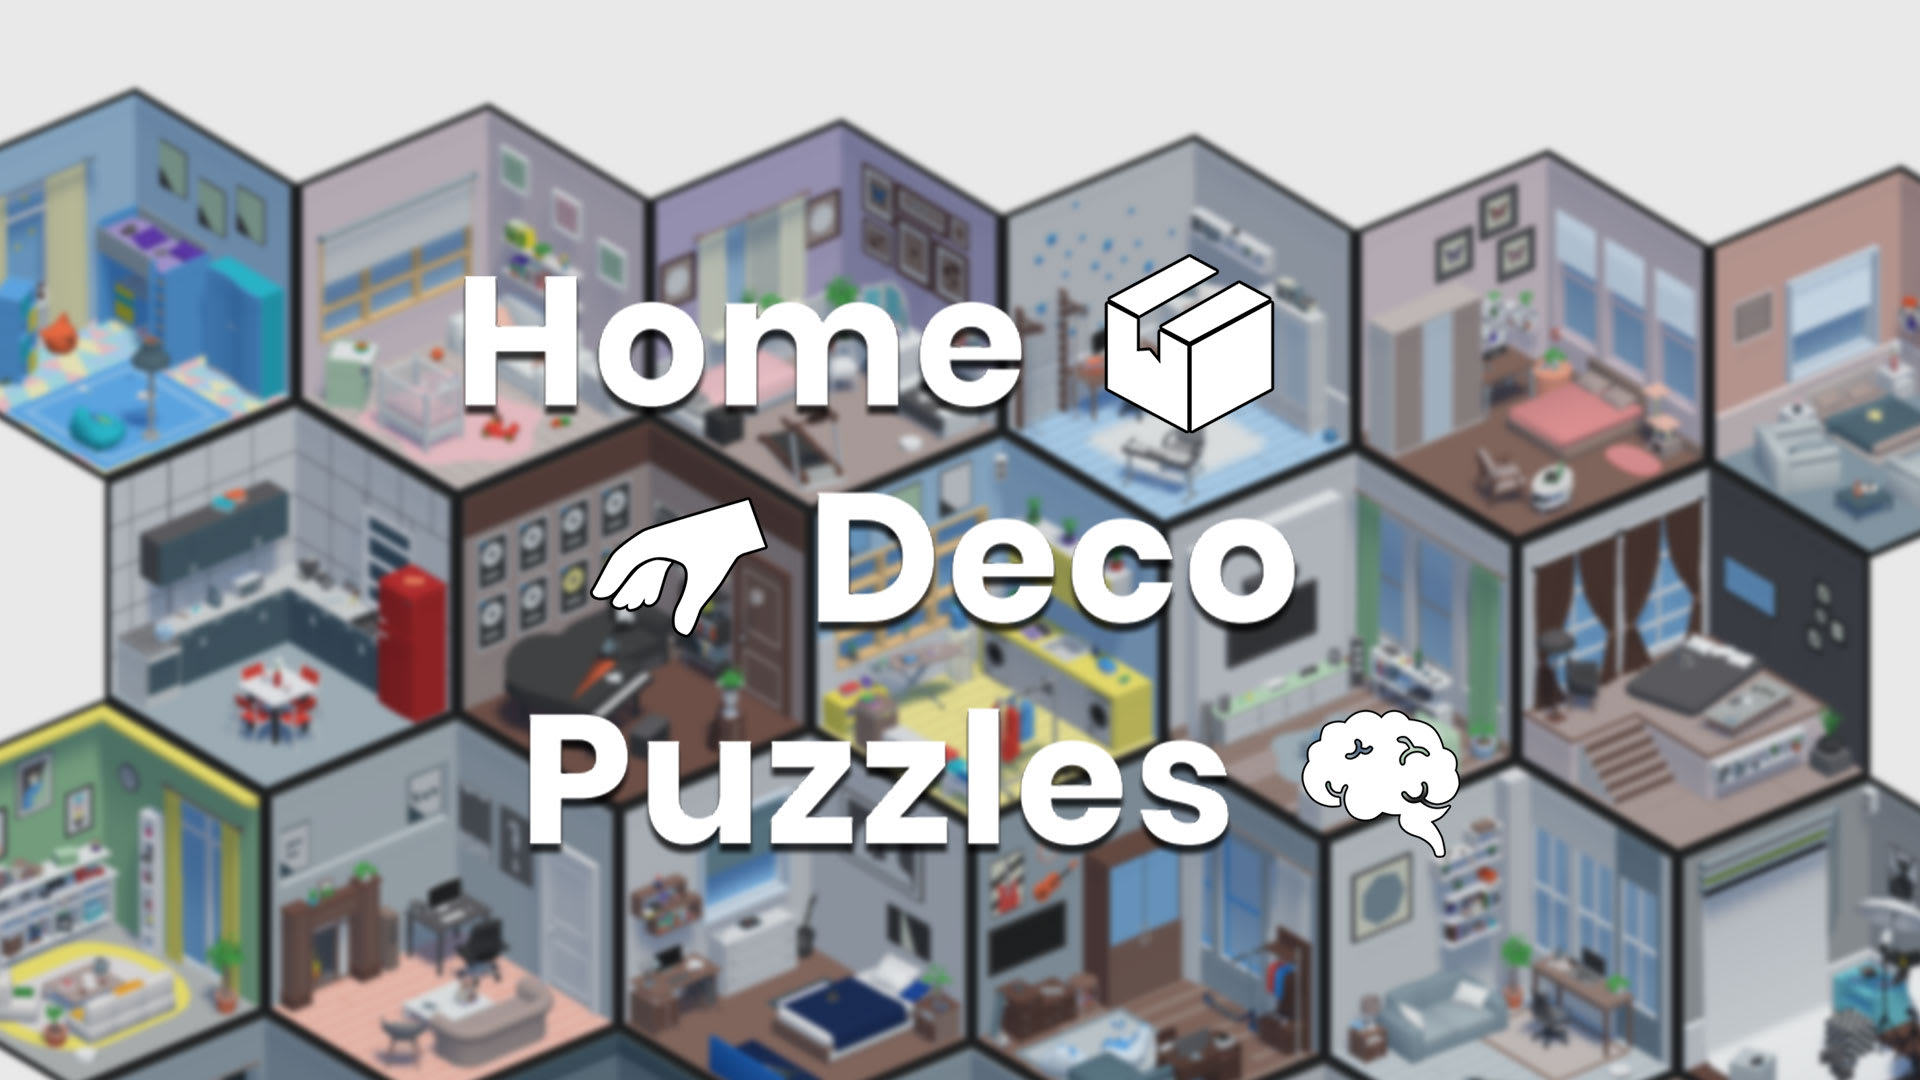 Home Deco Puzzles